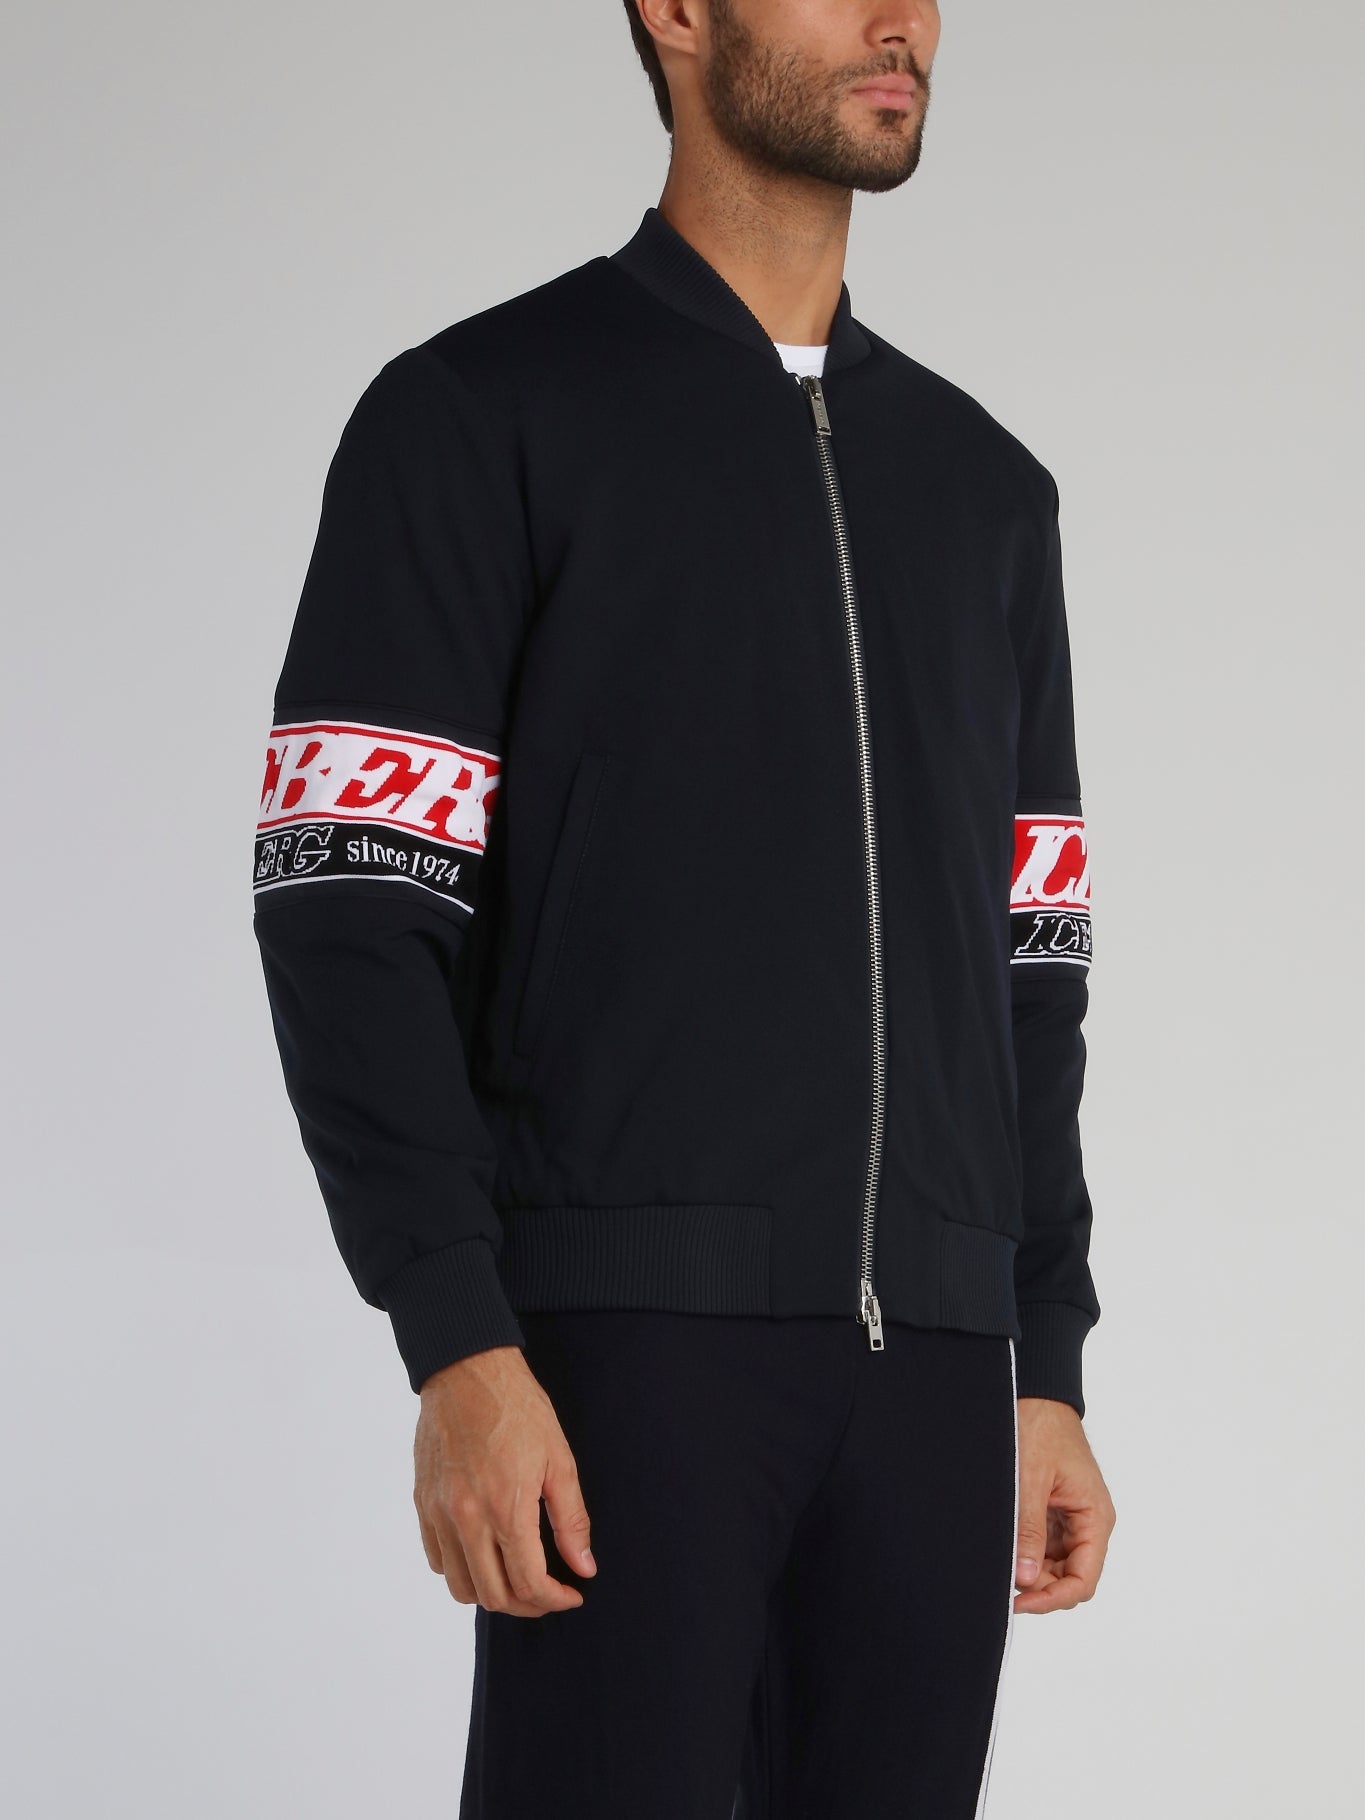 Navy logo Sleeve Zip Up Jacket